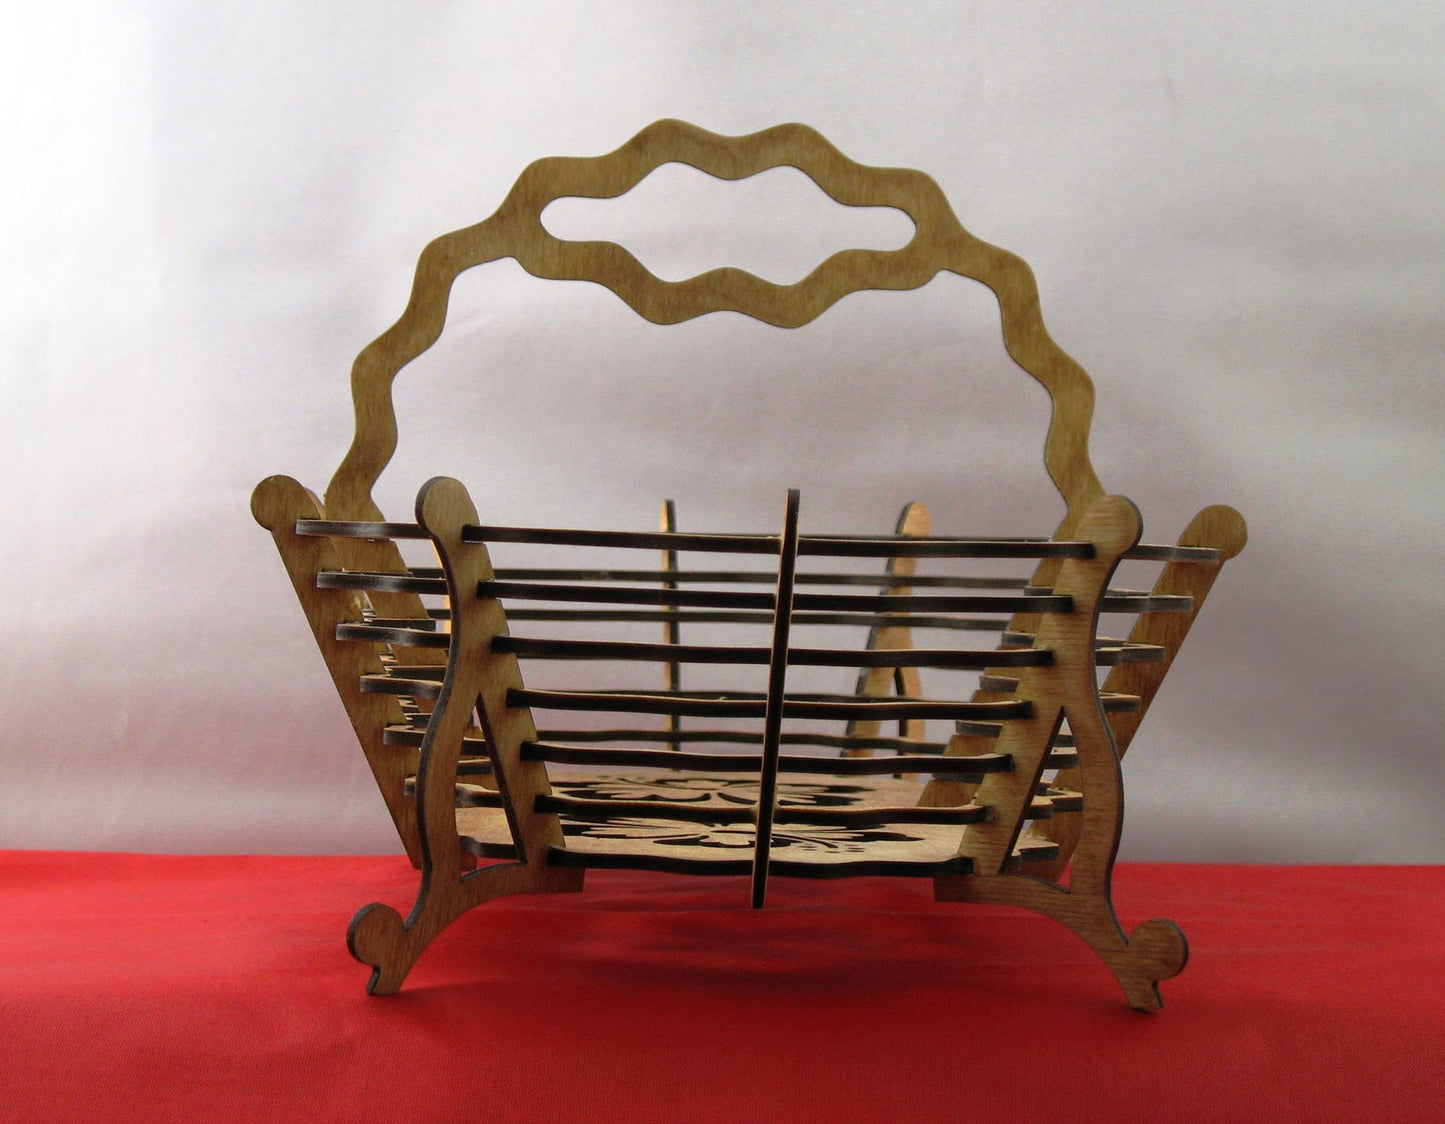 Basket Decorative Wooden Kit